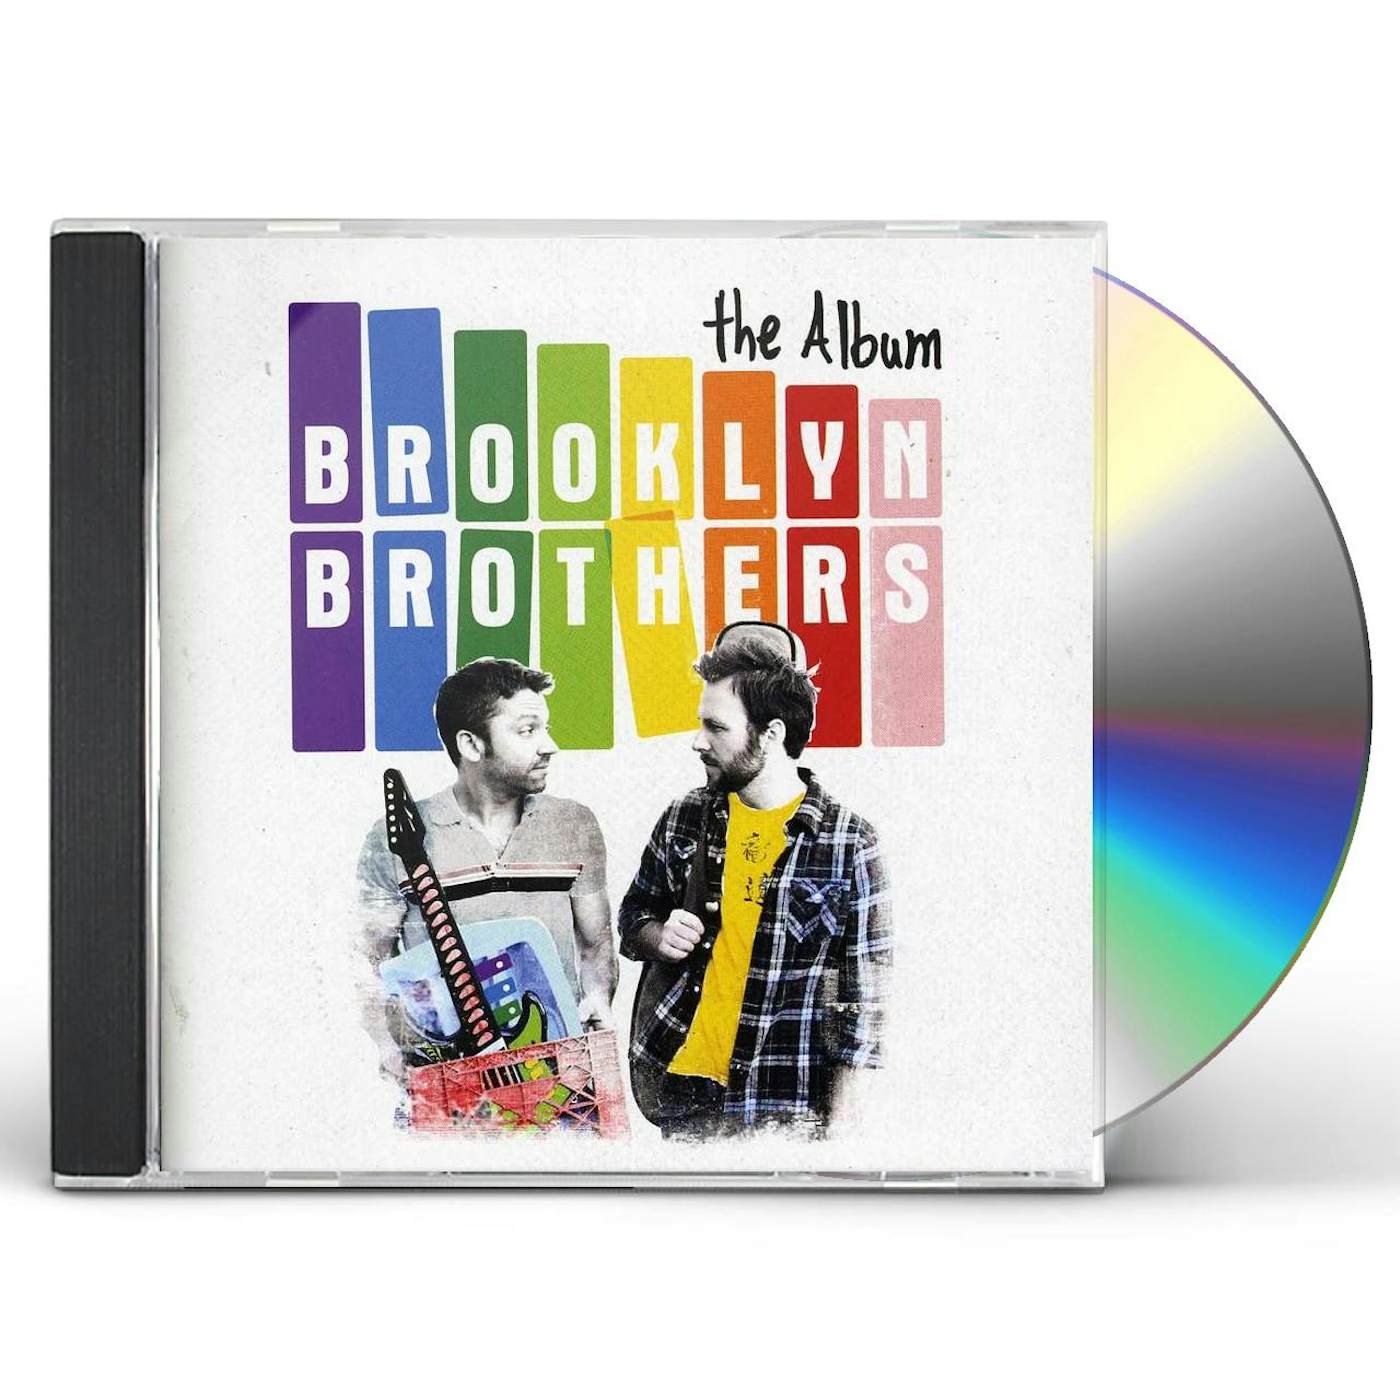 Brooklyn Brothers ALBUM CD